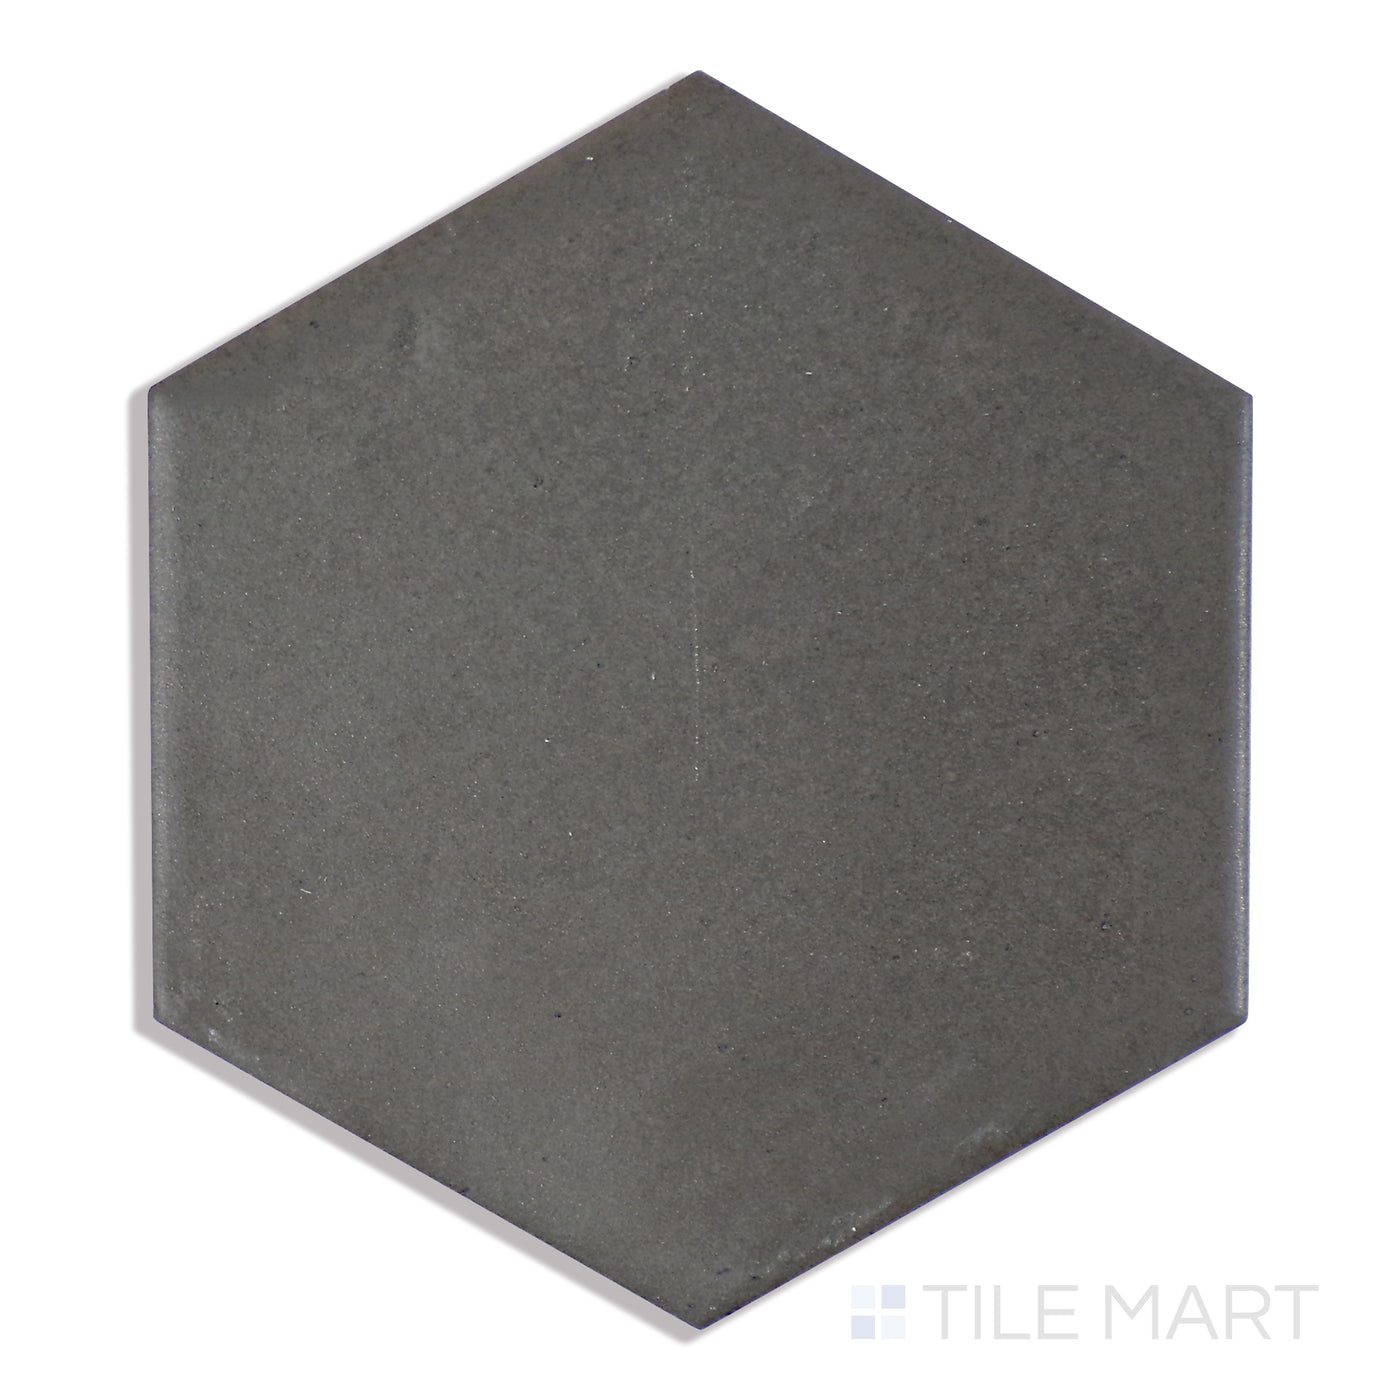 Celine Glazed Porcelain Field Tile 4.5X4 Black Matte